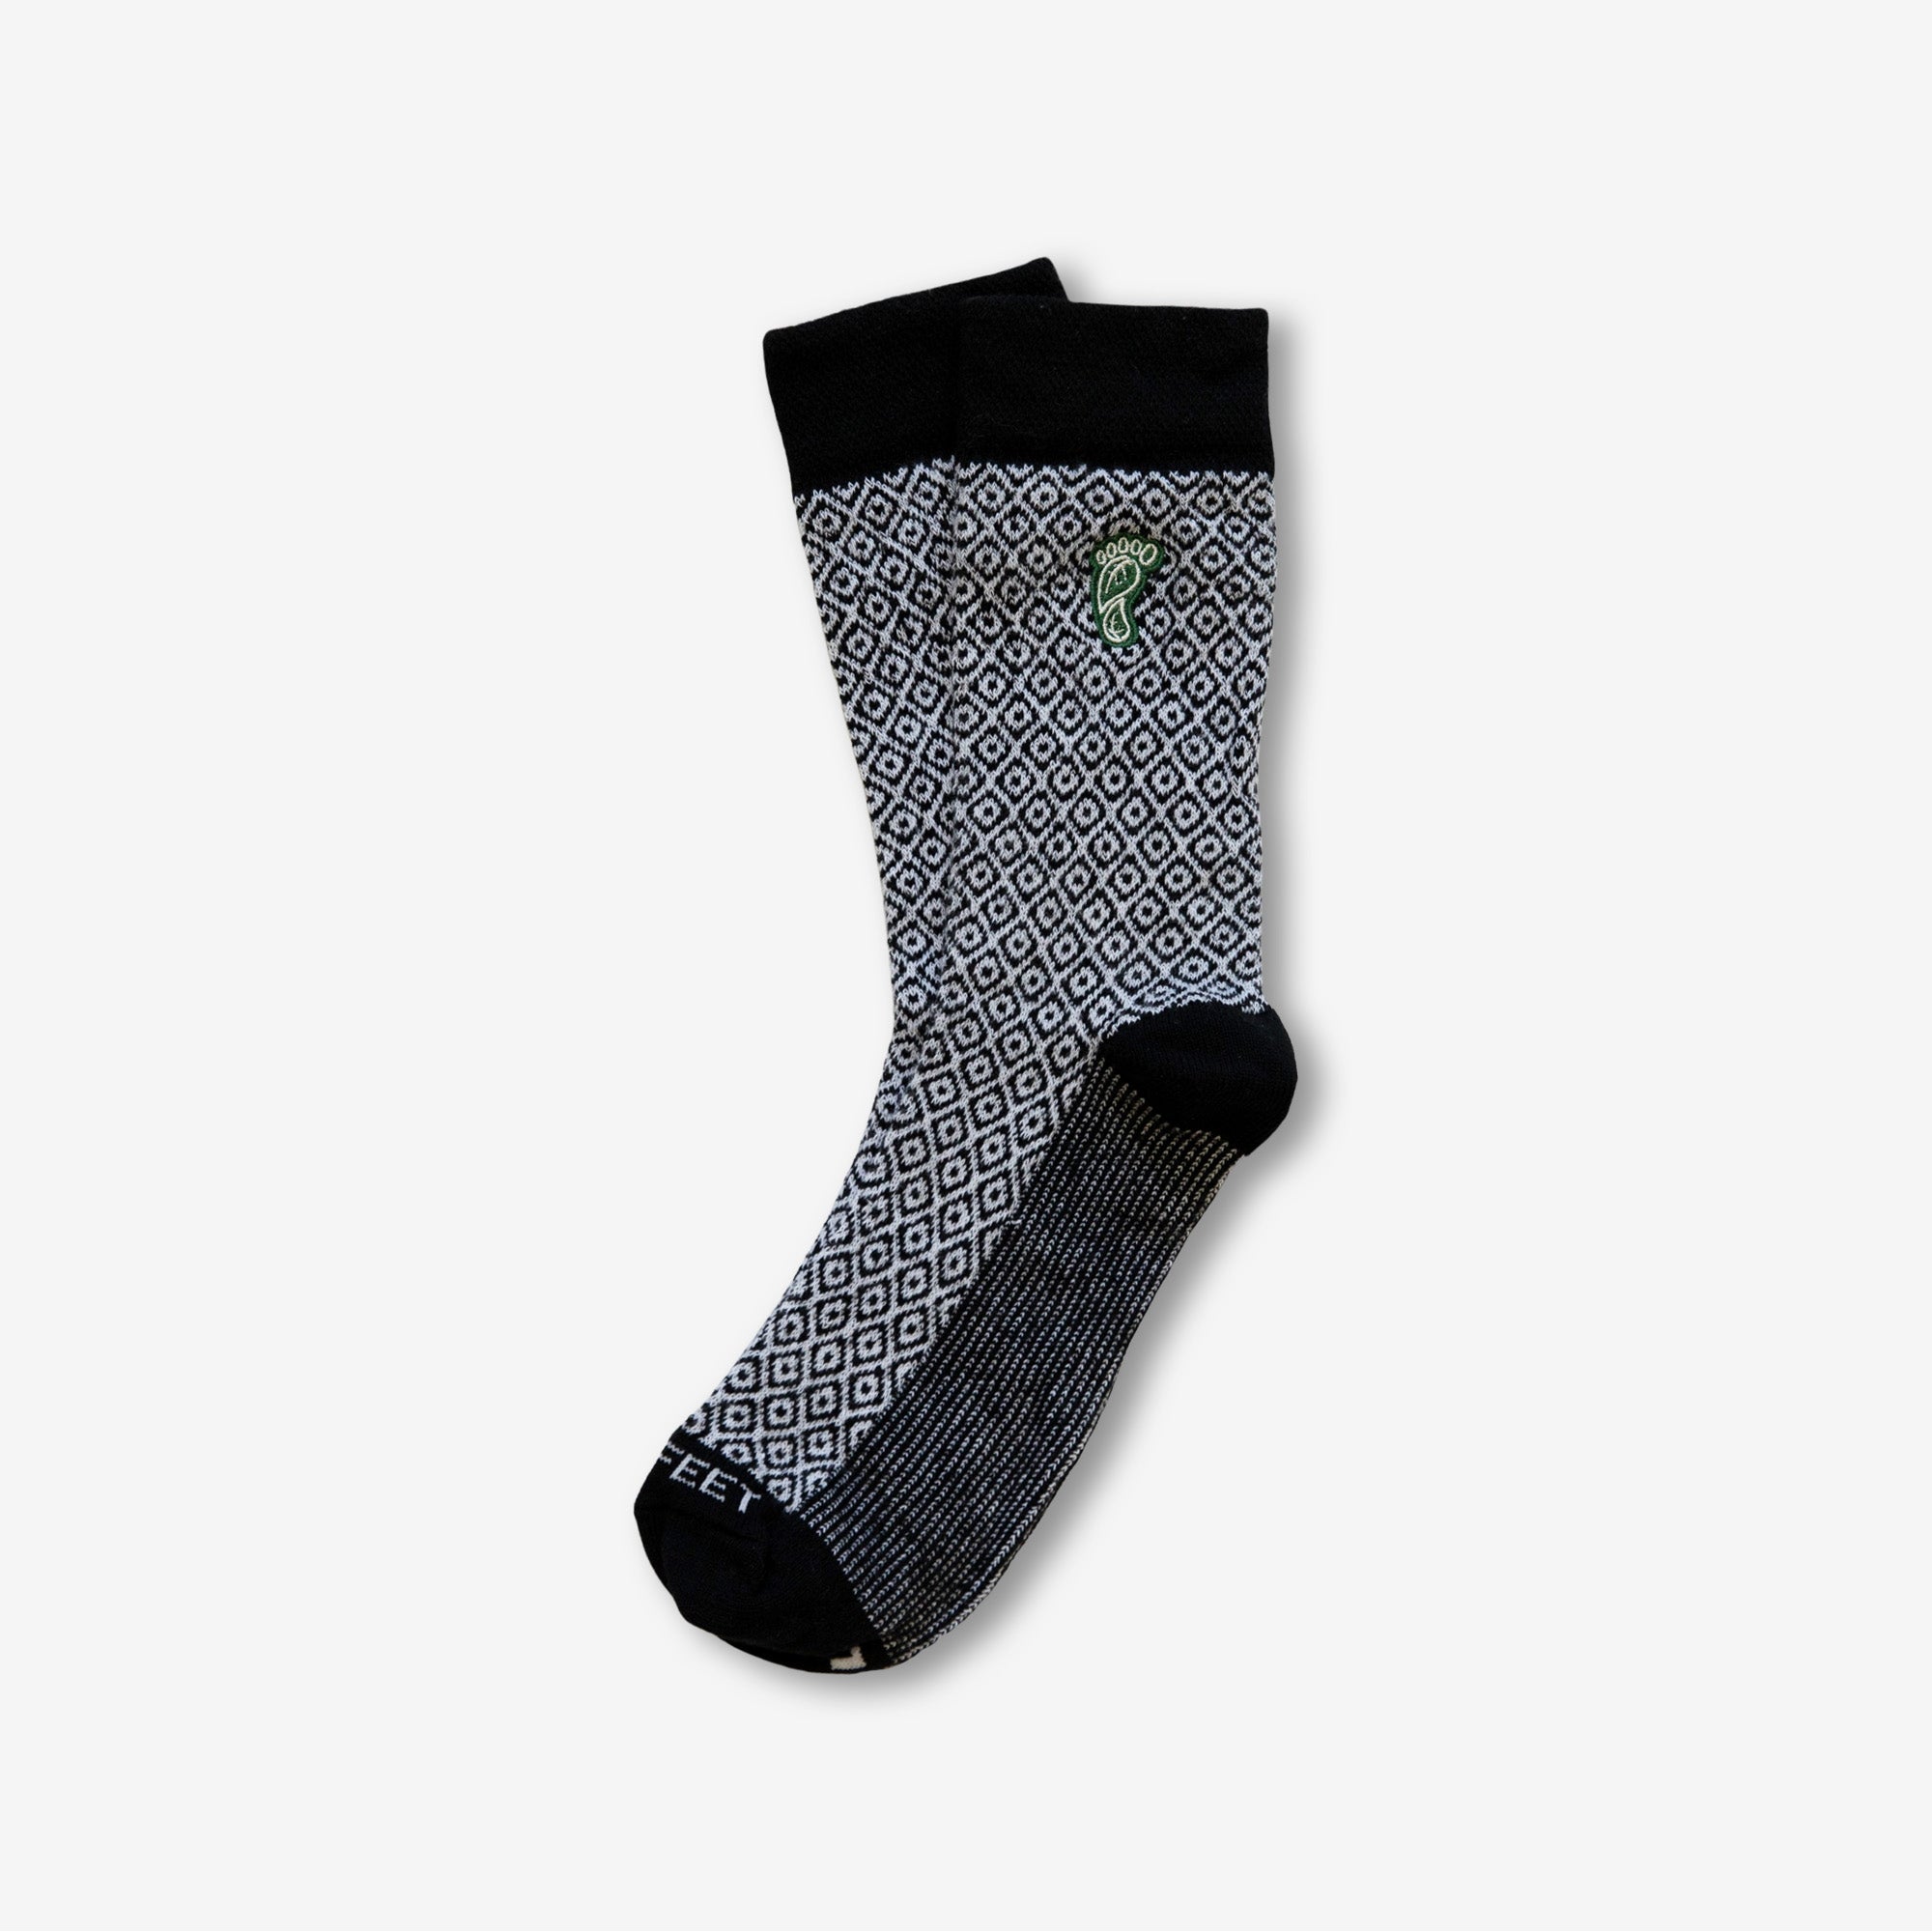 Black Diamond Patterned socks from Hippy Feet